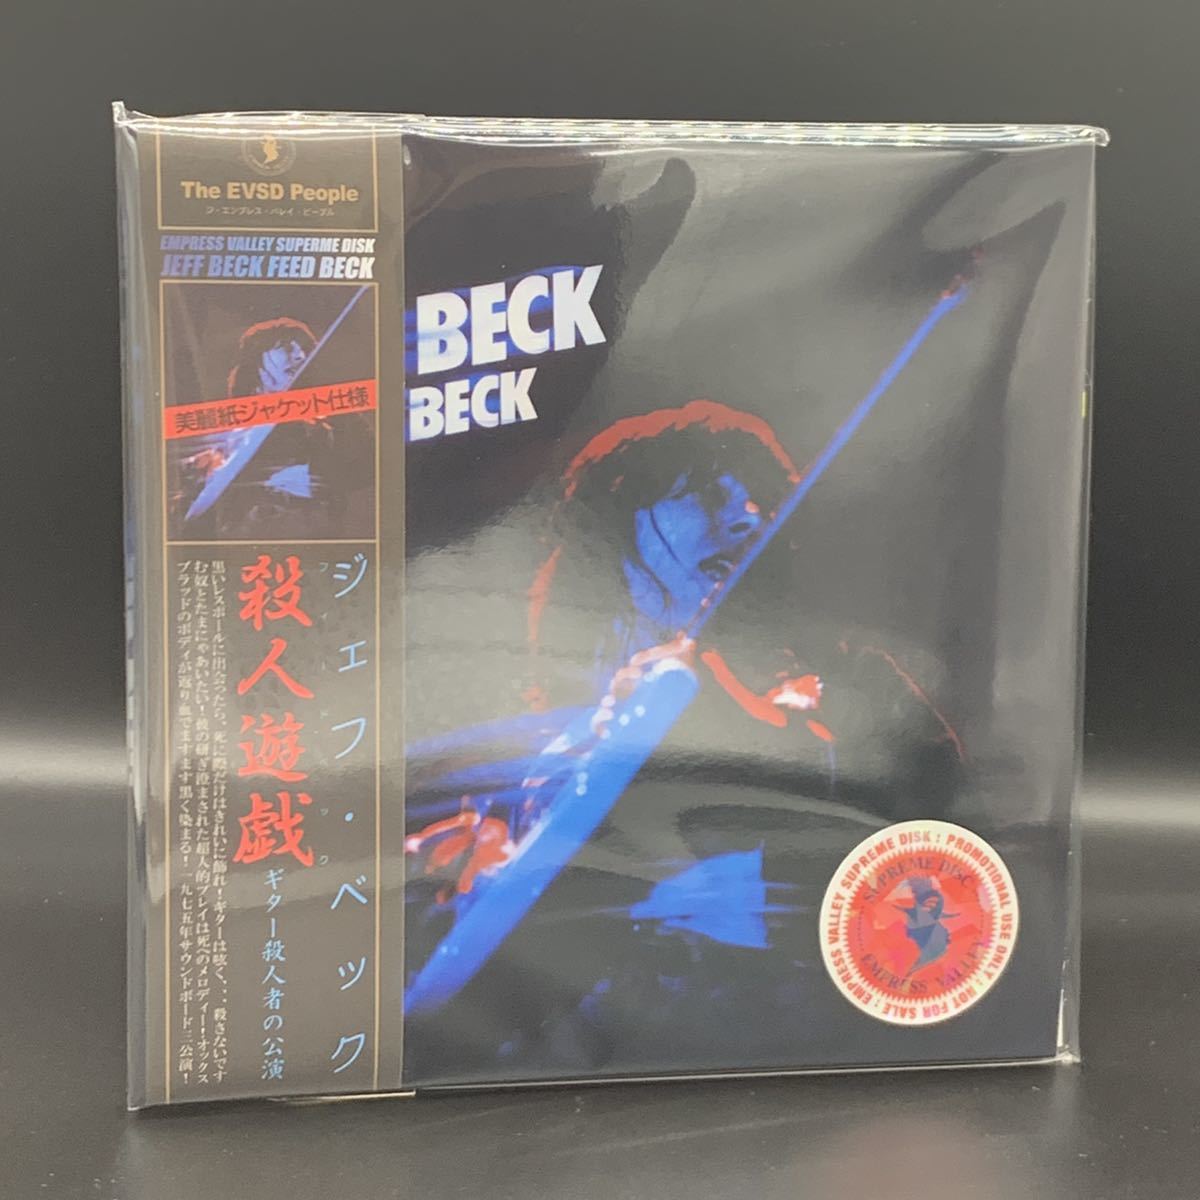 JEFF BECK : FEED BECK「殺人遊戯」PROMO BOX EMPRESS VALLEY SUPREME DISK PROMO VERSION BOX! HIGH END!